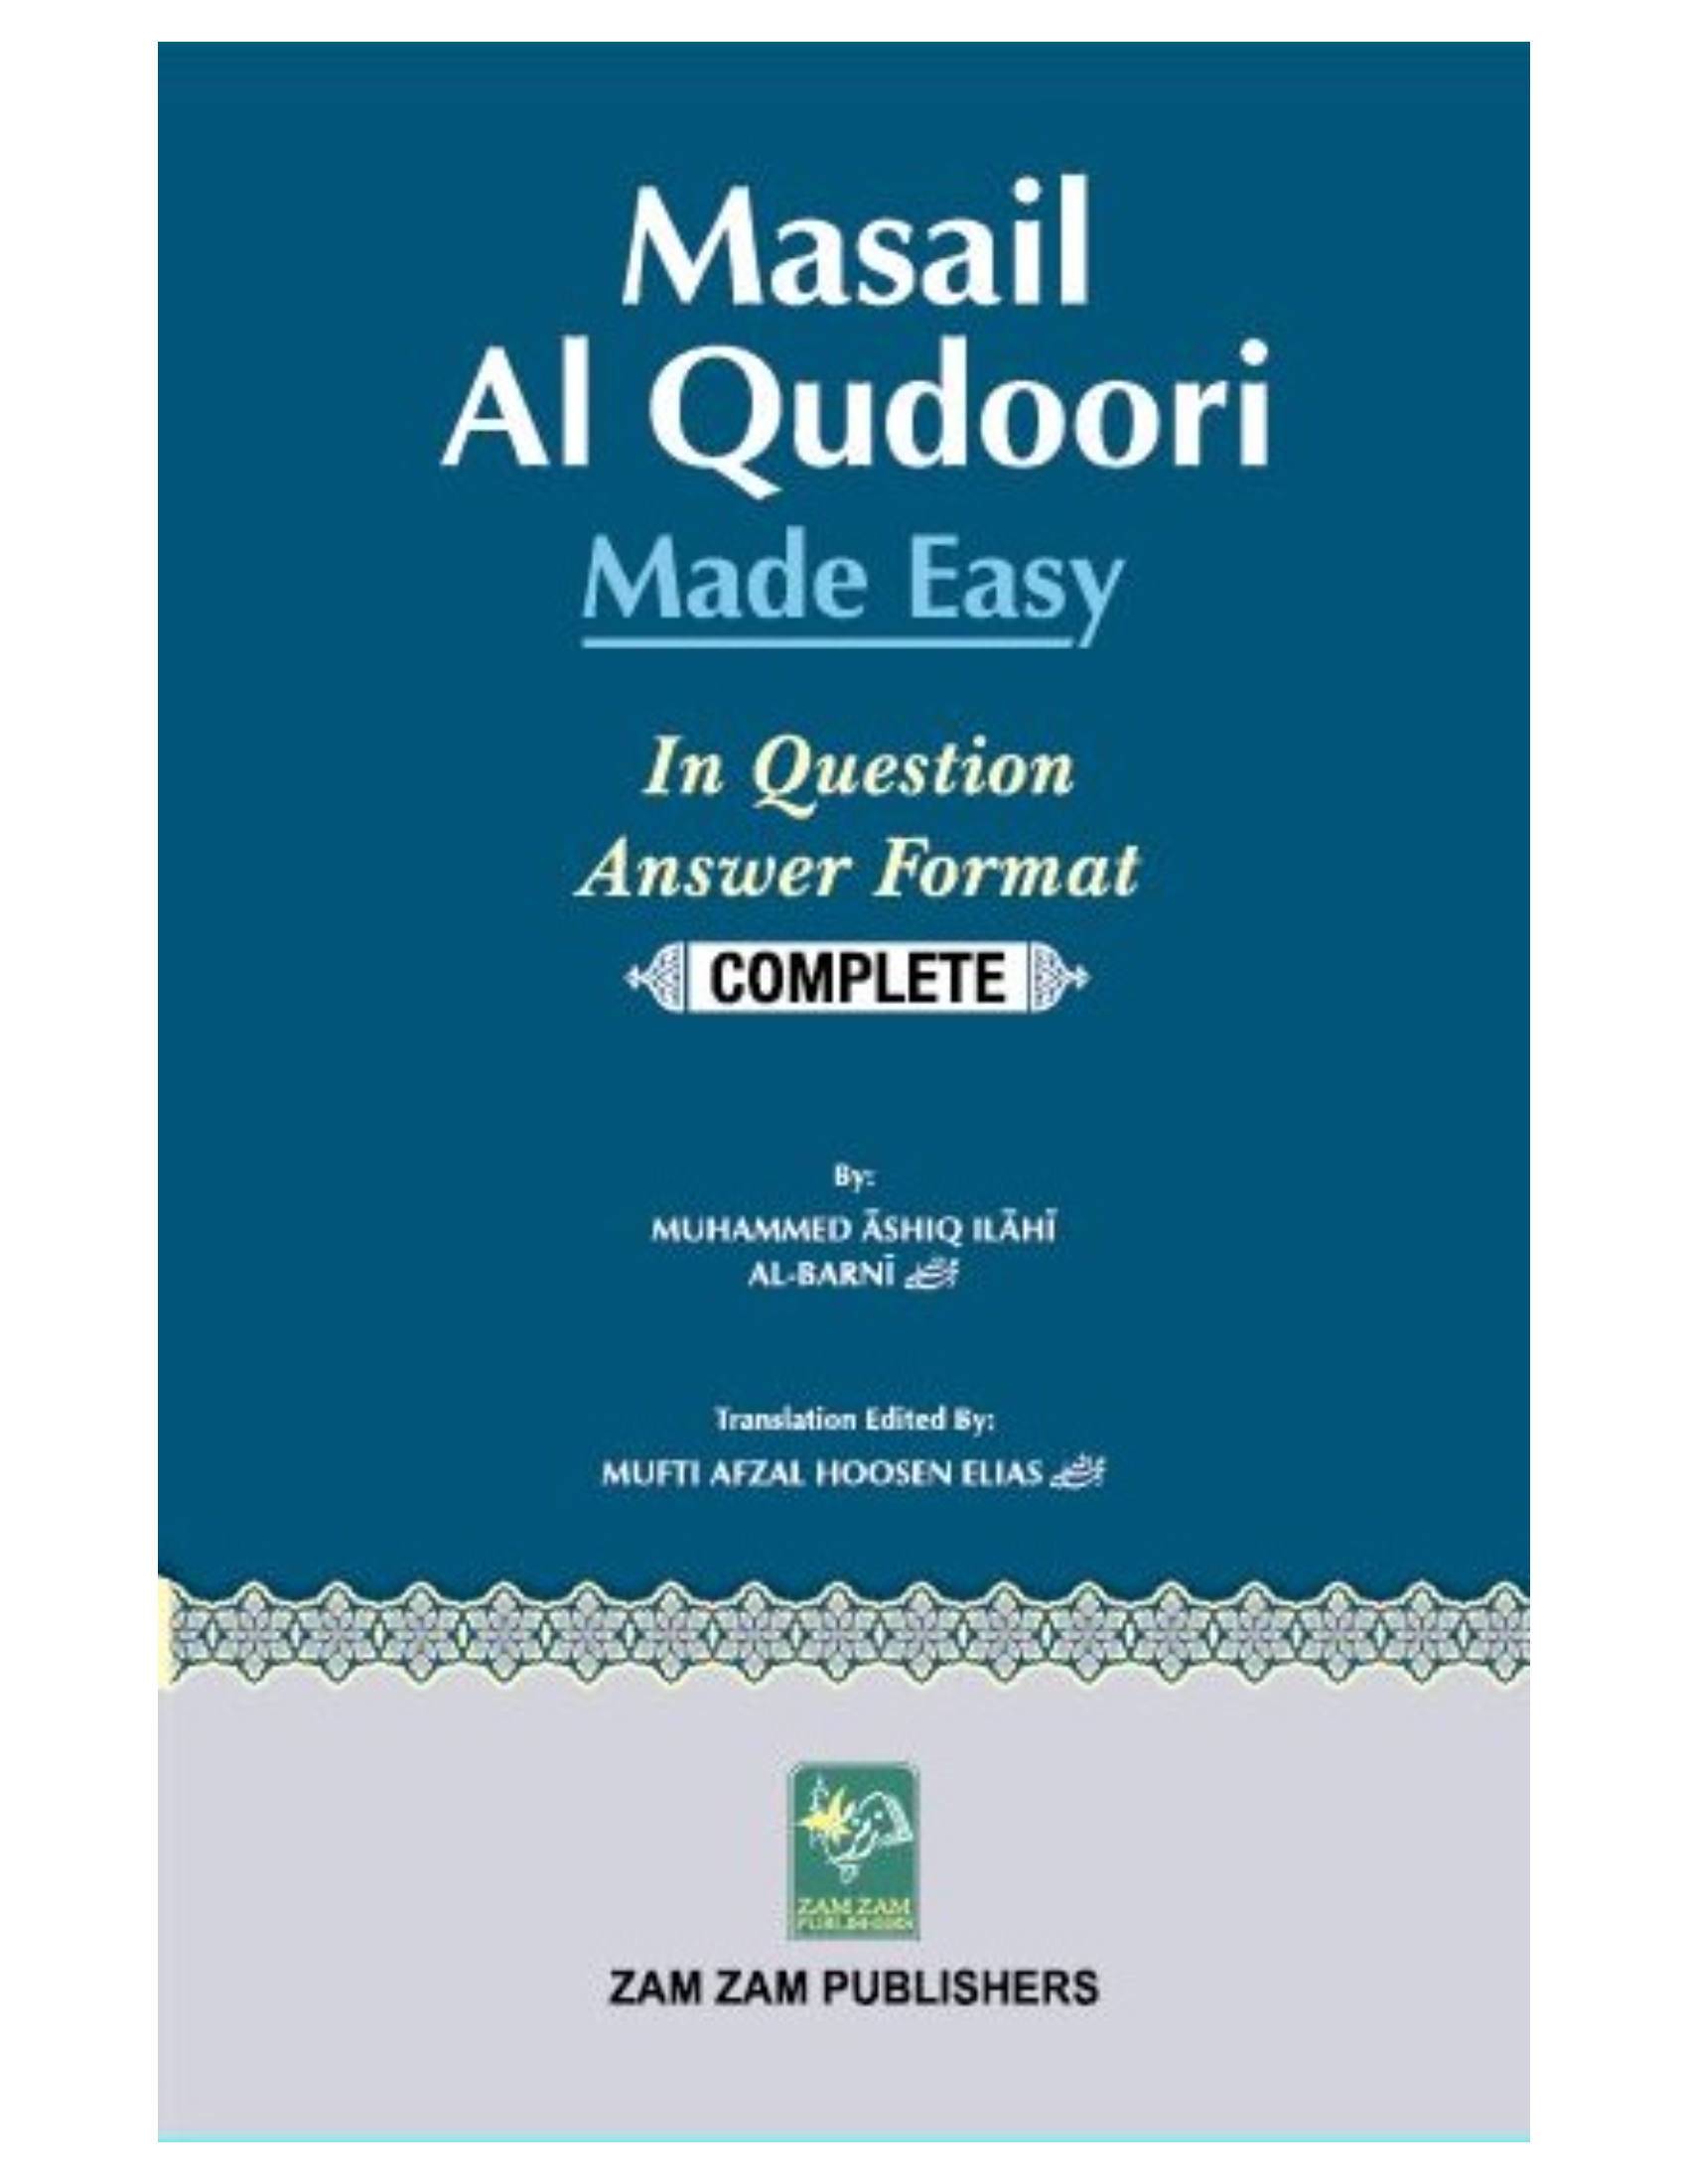 Masail Al Qudoori Made Easy